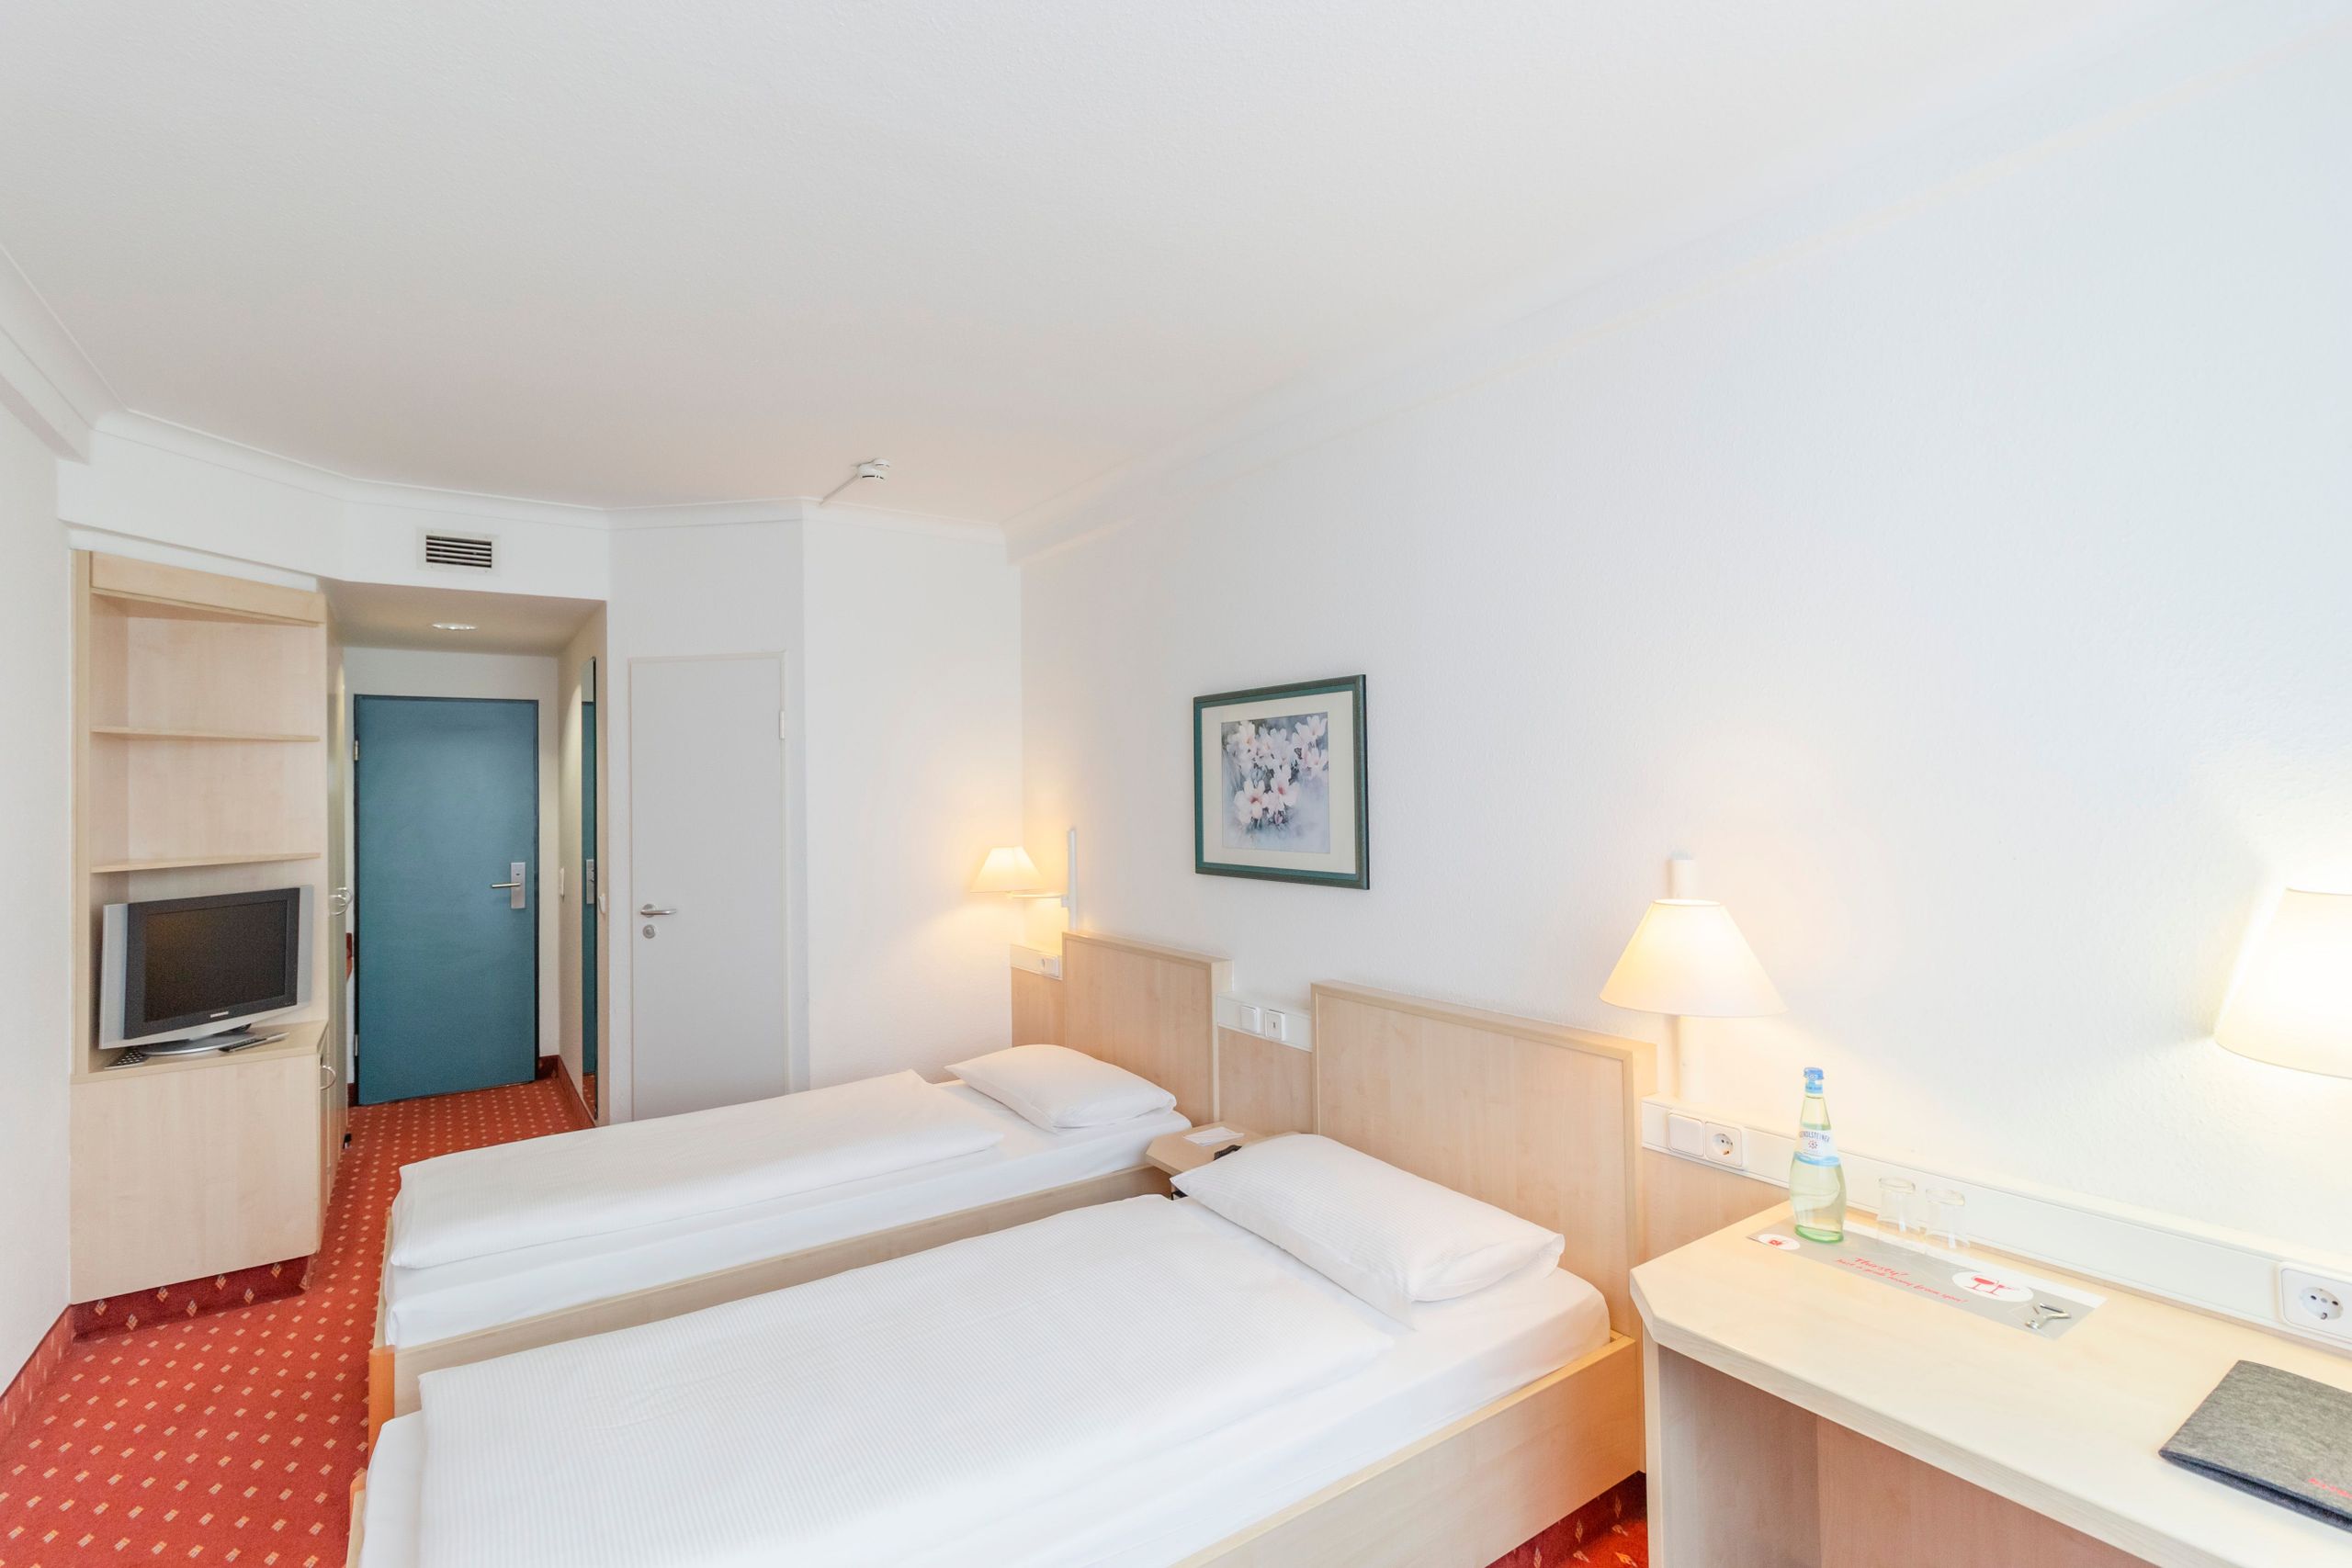 IntercityHotel Schwerin - Standardrum med separata sängar